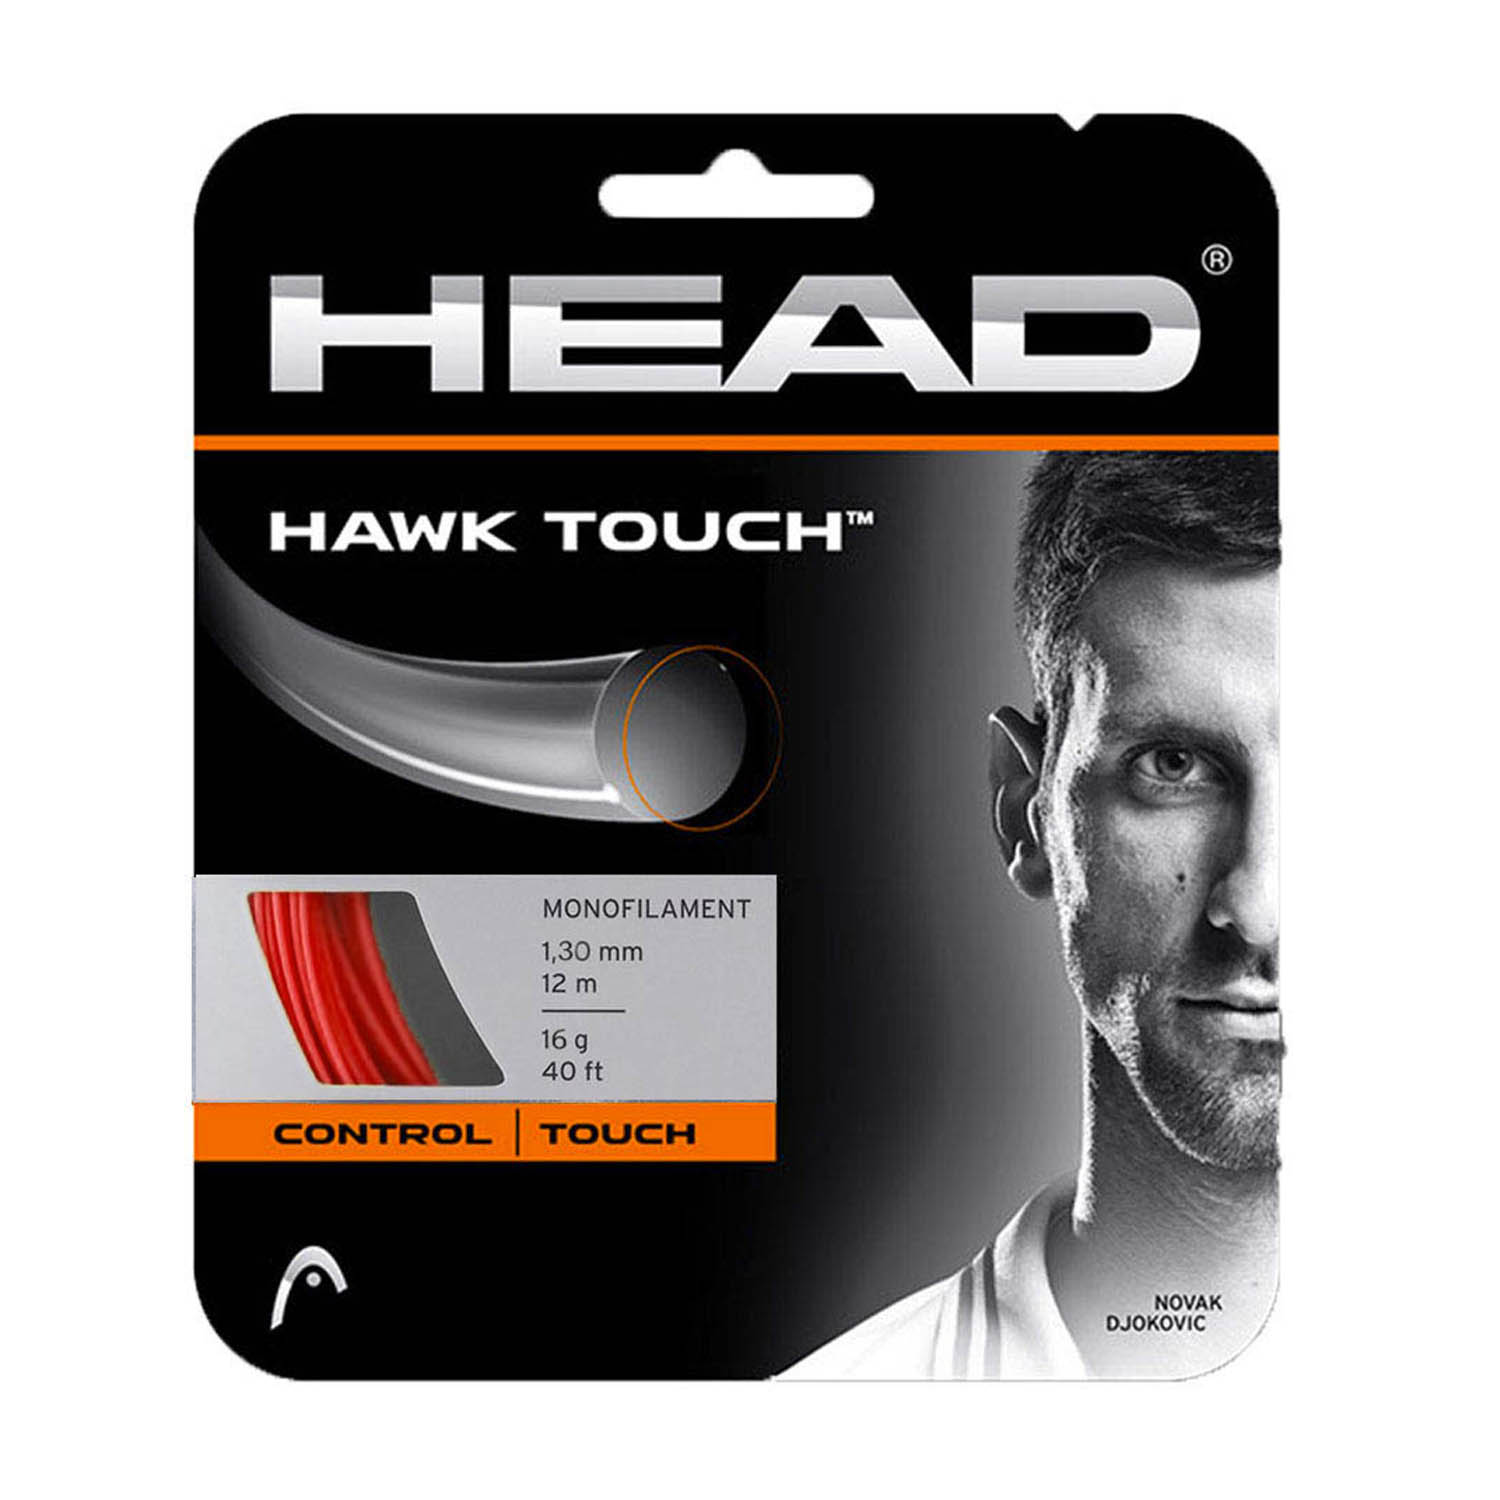 Head Hawk Touch 1.30 12 m Set - Red